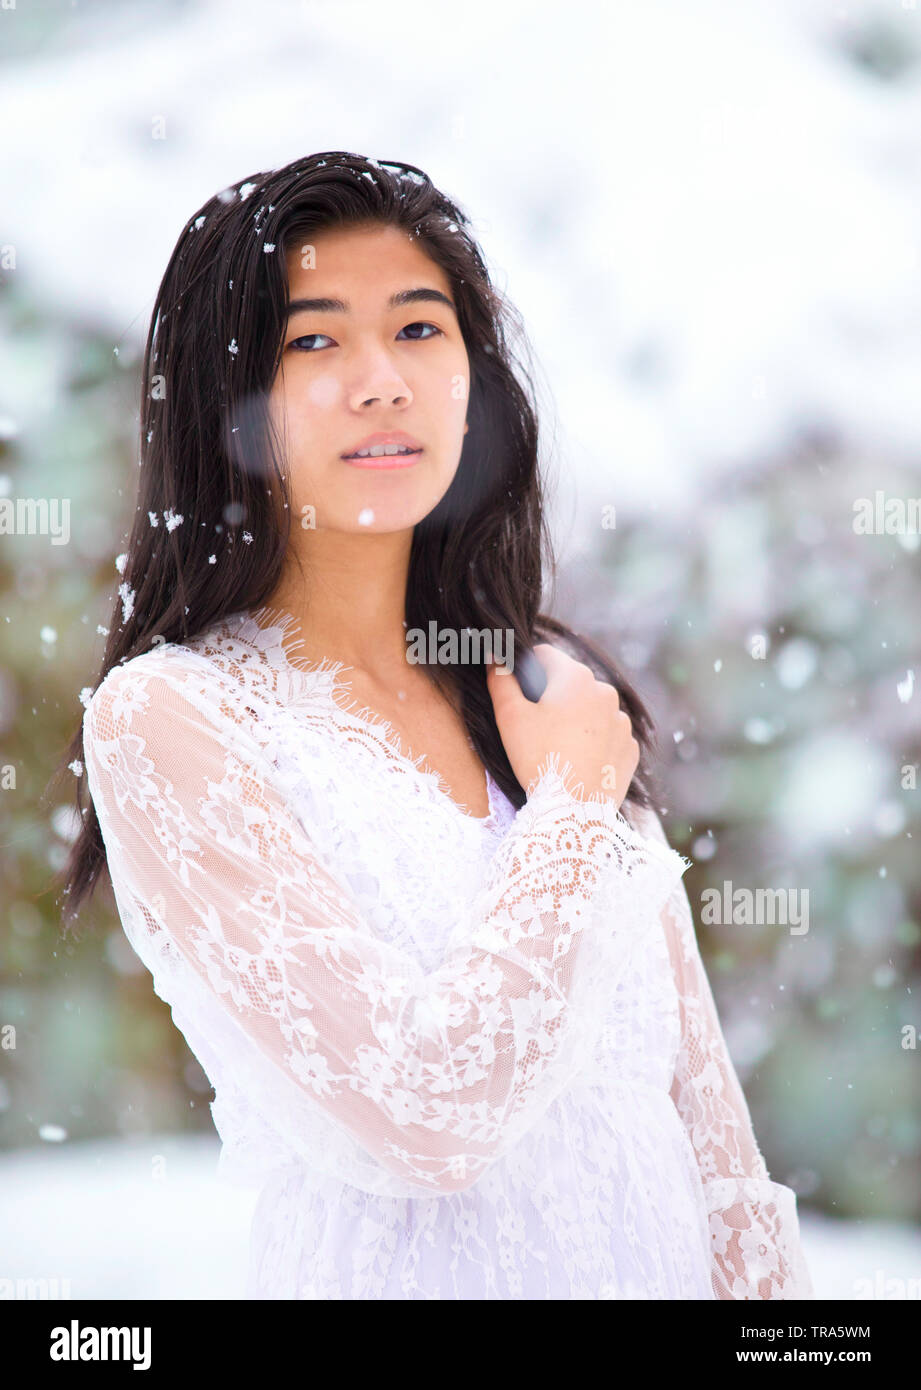 Beautiful biracial teen girl in white lace dress standing outdoors in ...